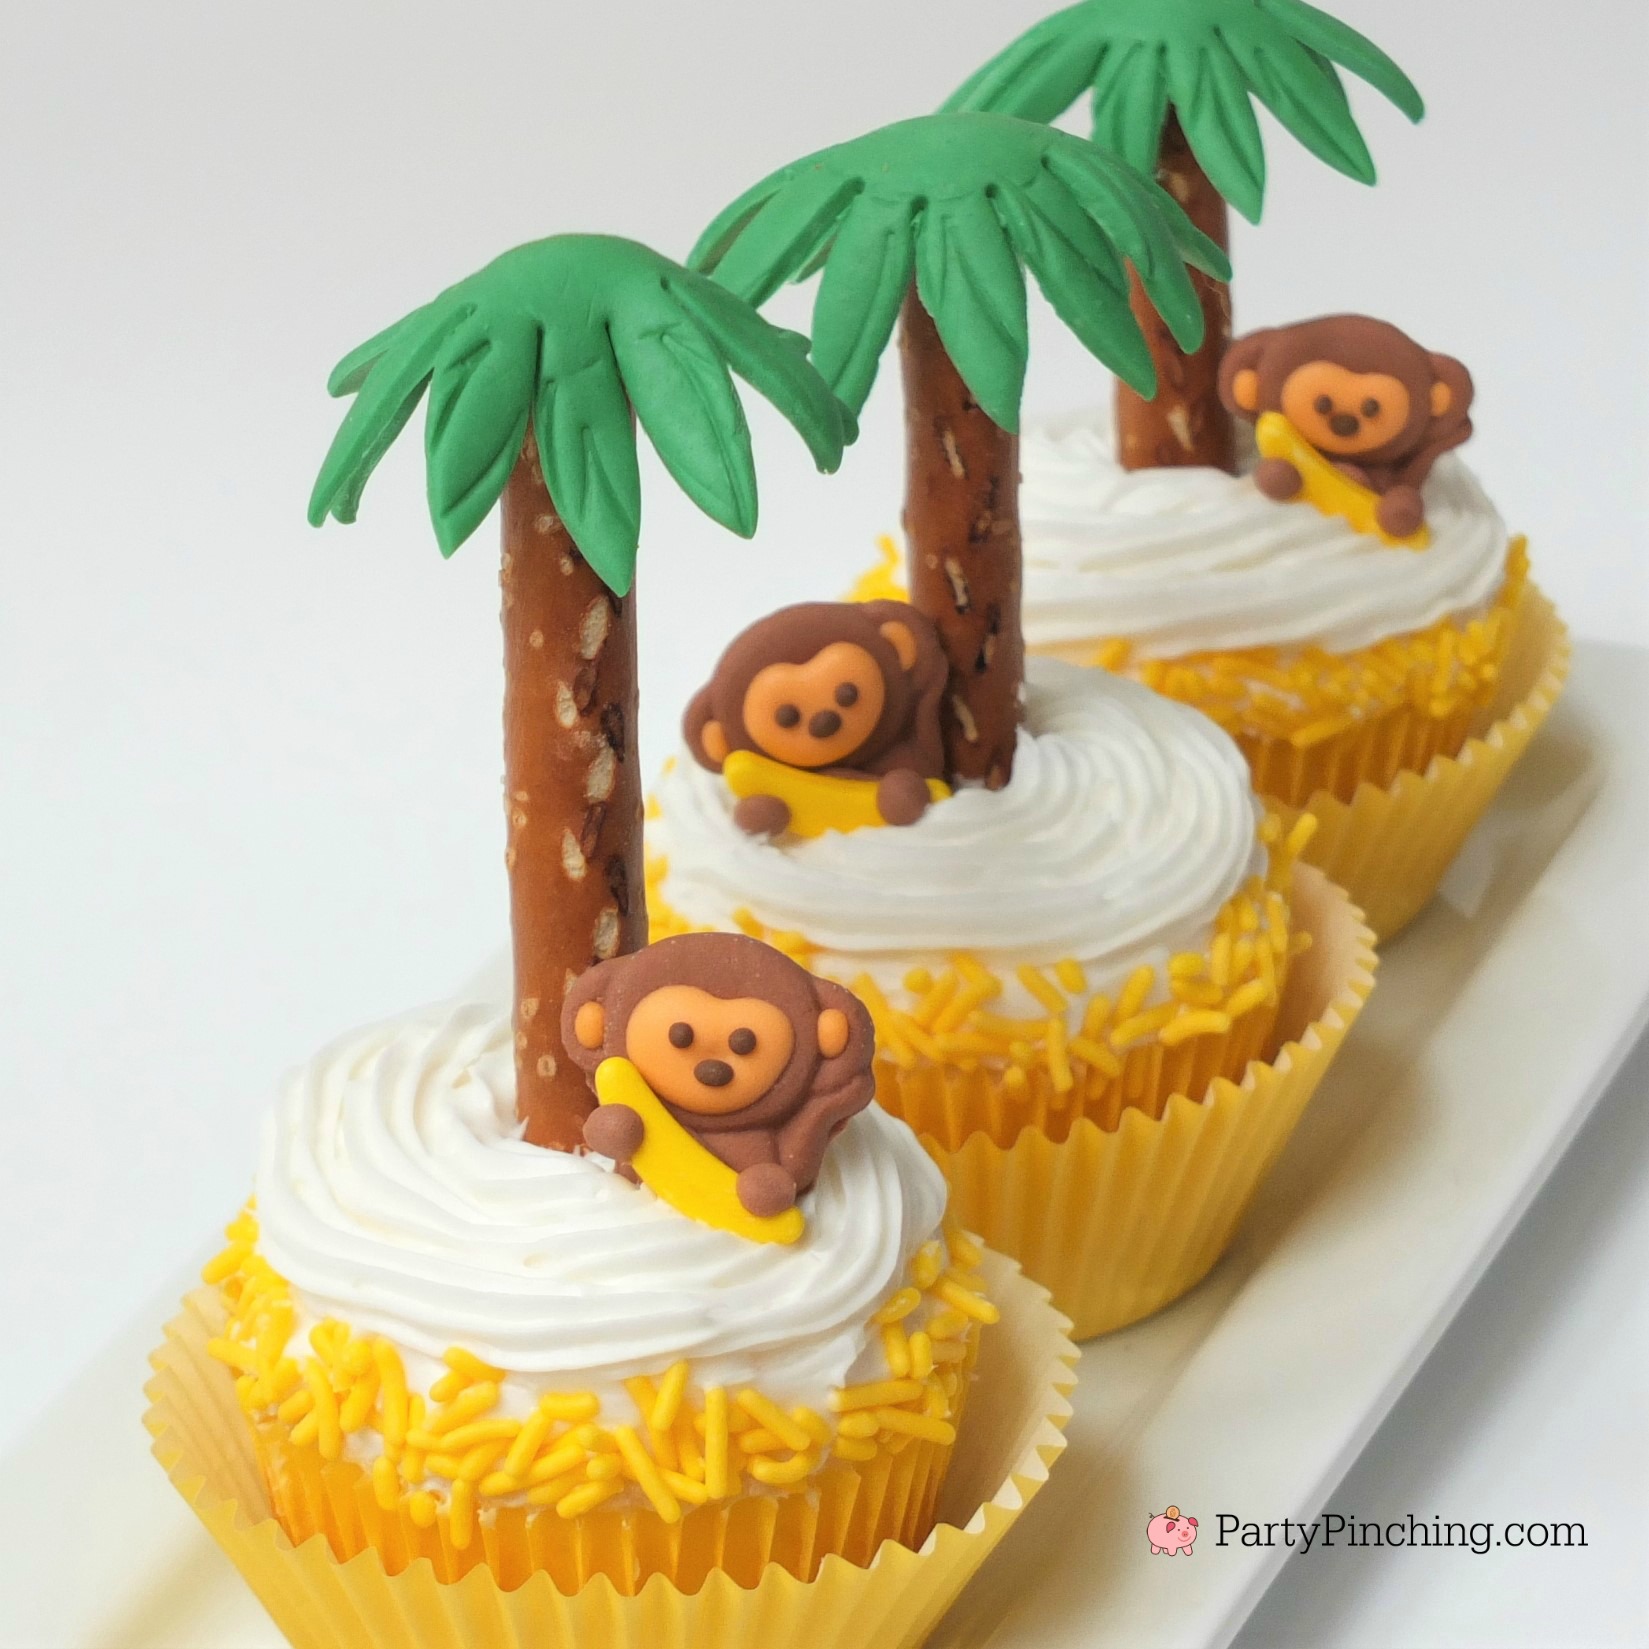 monkey cupcakes, safari jungle party ideas, cute adorable cupcakes for kids, fun food, sweet treats for birthday, monkey banana cupcake with pretzel palm tree